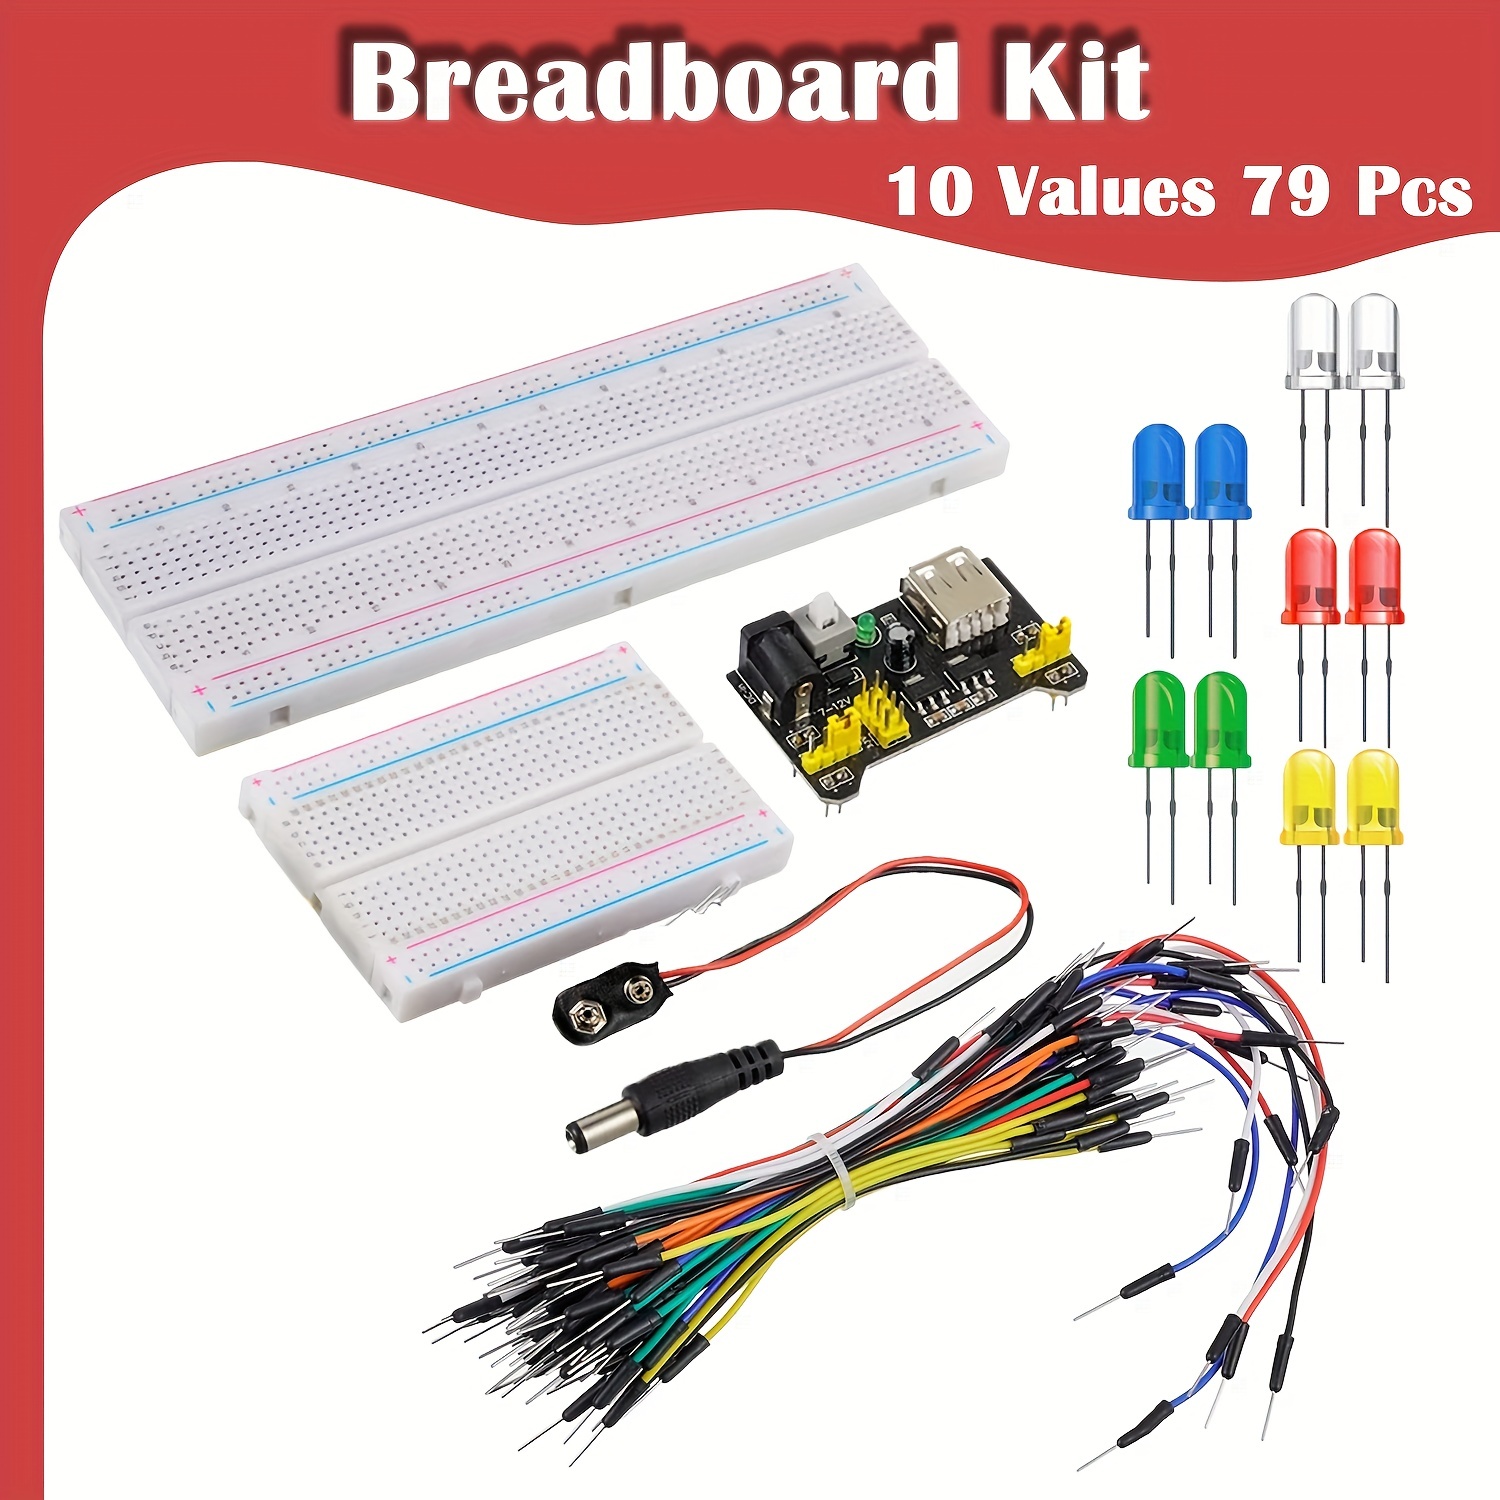 Breadboard Kit